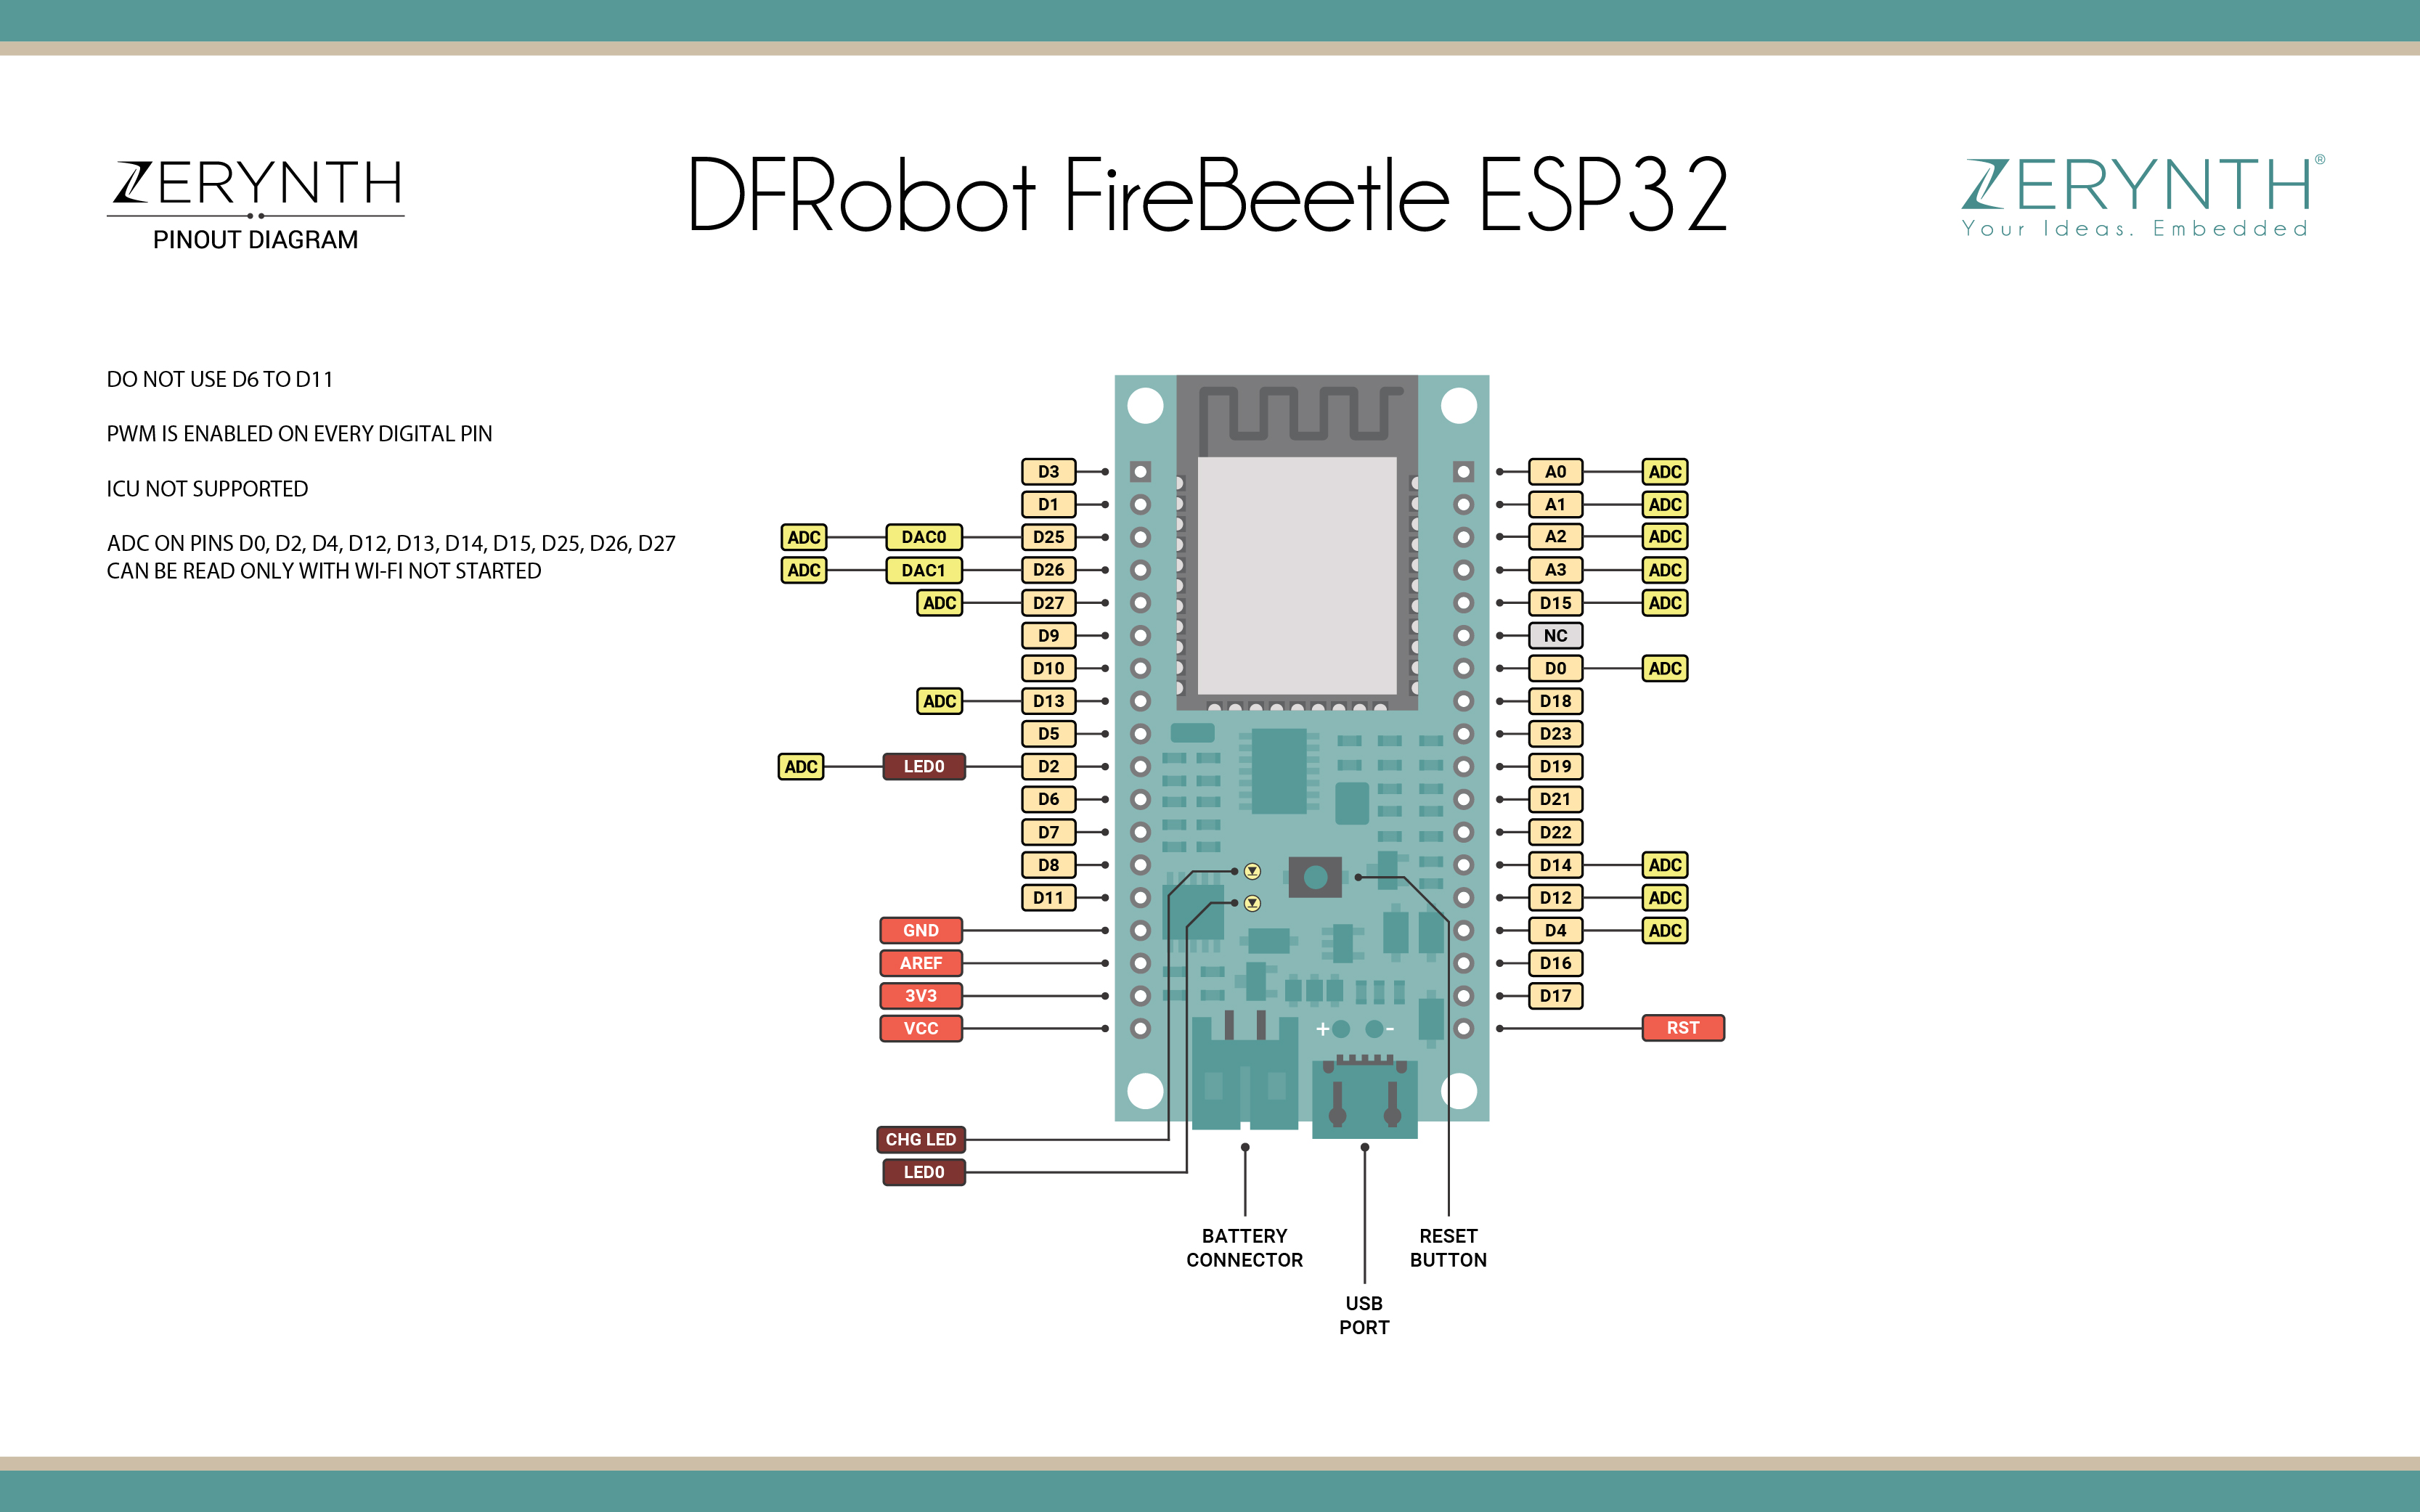 DFRobot FireBeetle Esp32